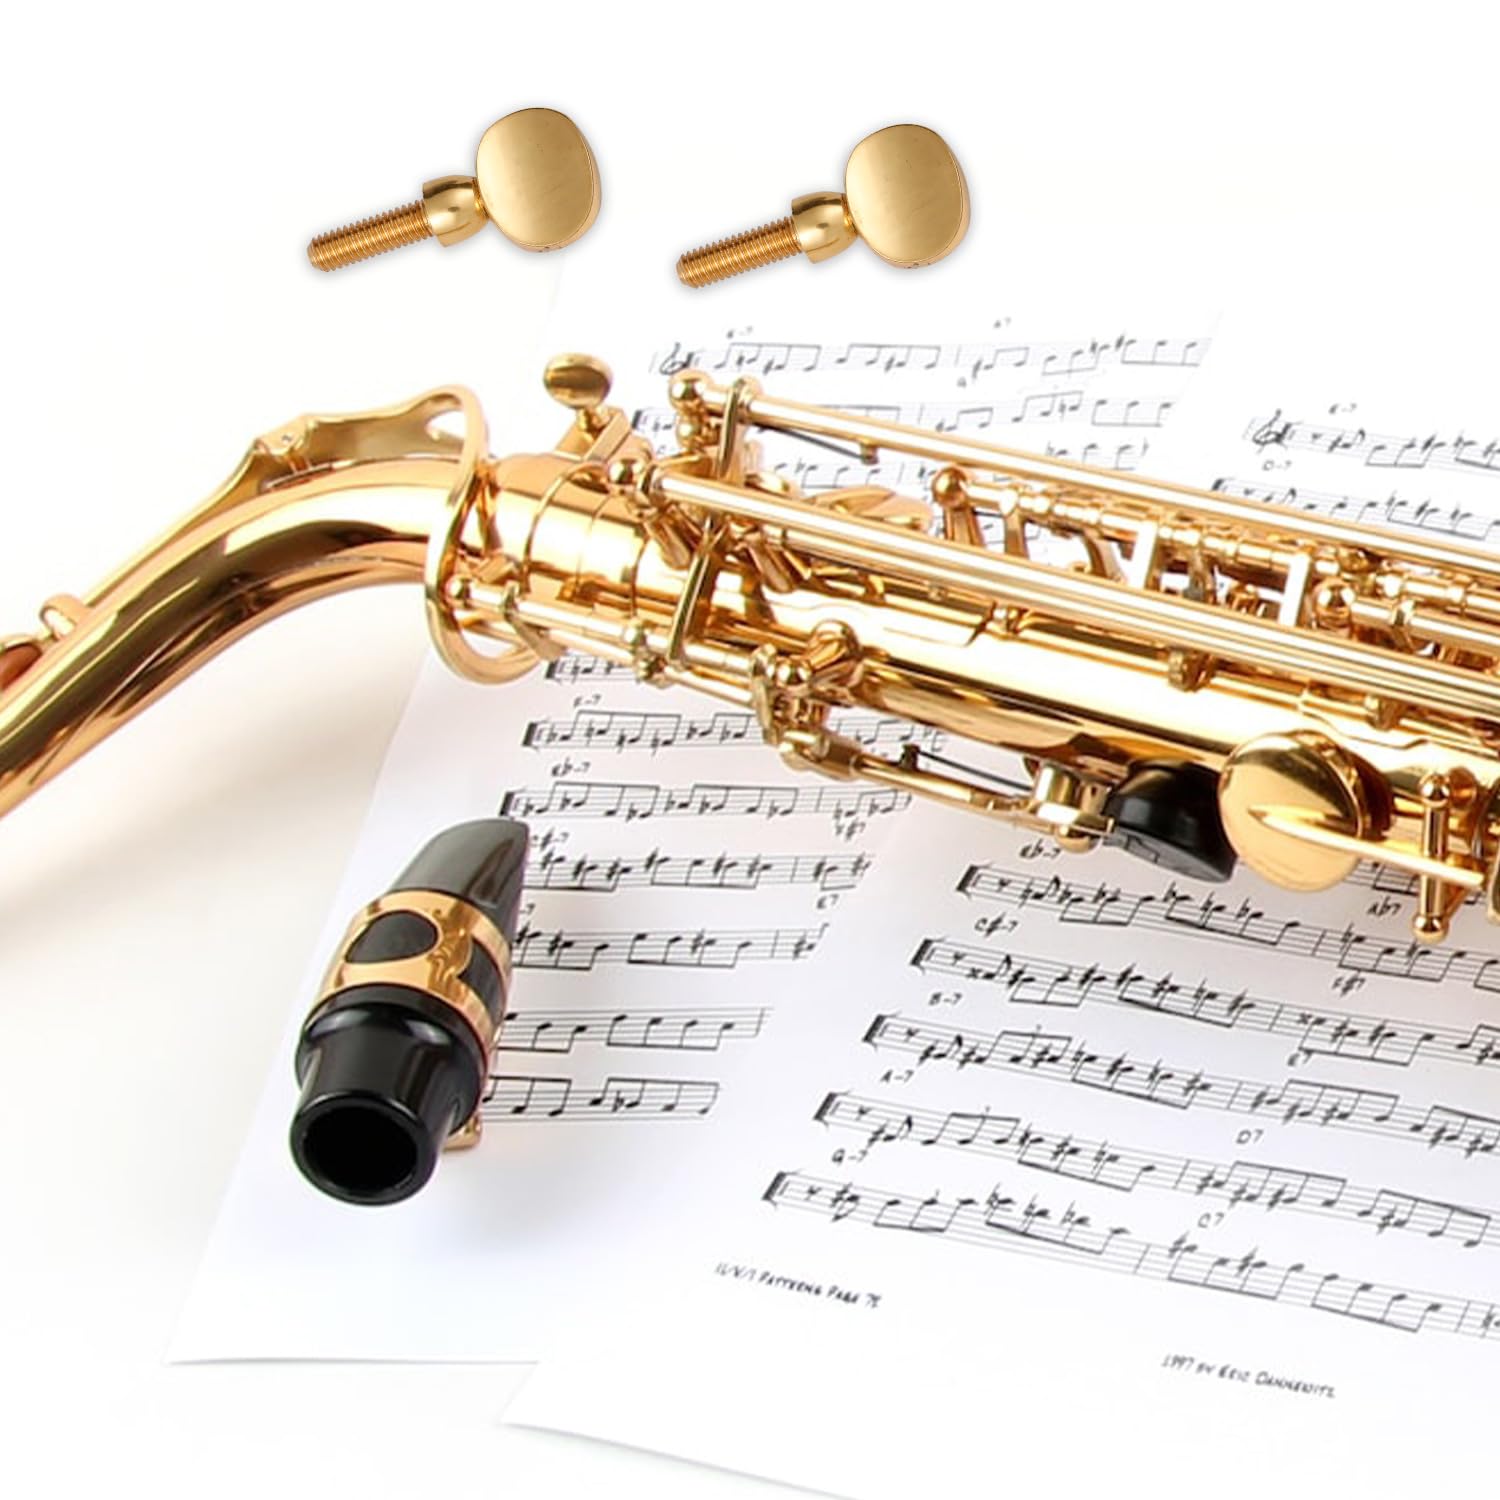 2pcs Saxophone Neck Screws, Heavy Golden Sax Neck Screw Brass Tightening Attach Sax Screw Tightener for Soprano Alto Tenor, Neck Parts Replacement Instrument Accessory